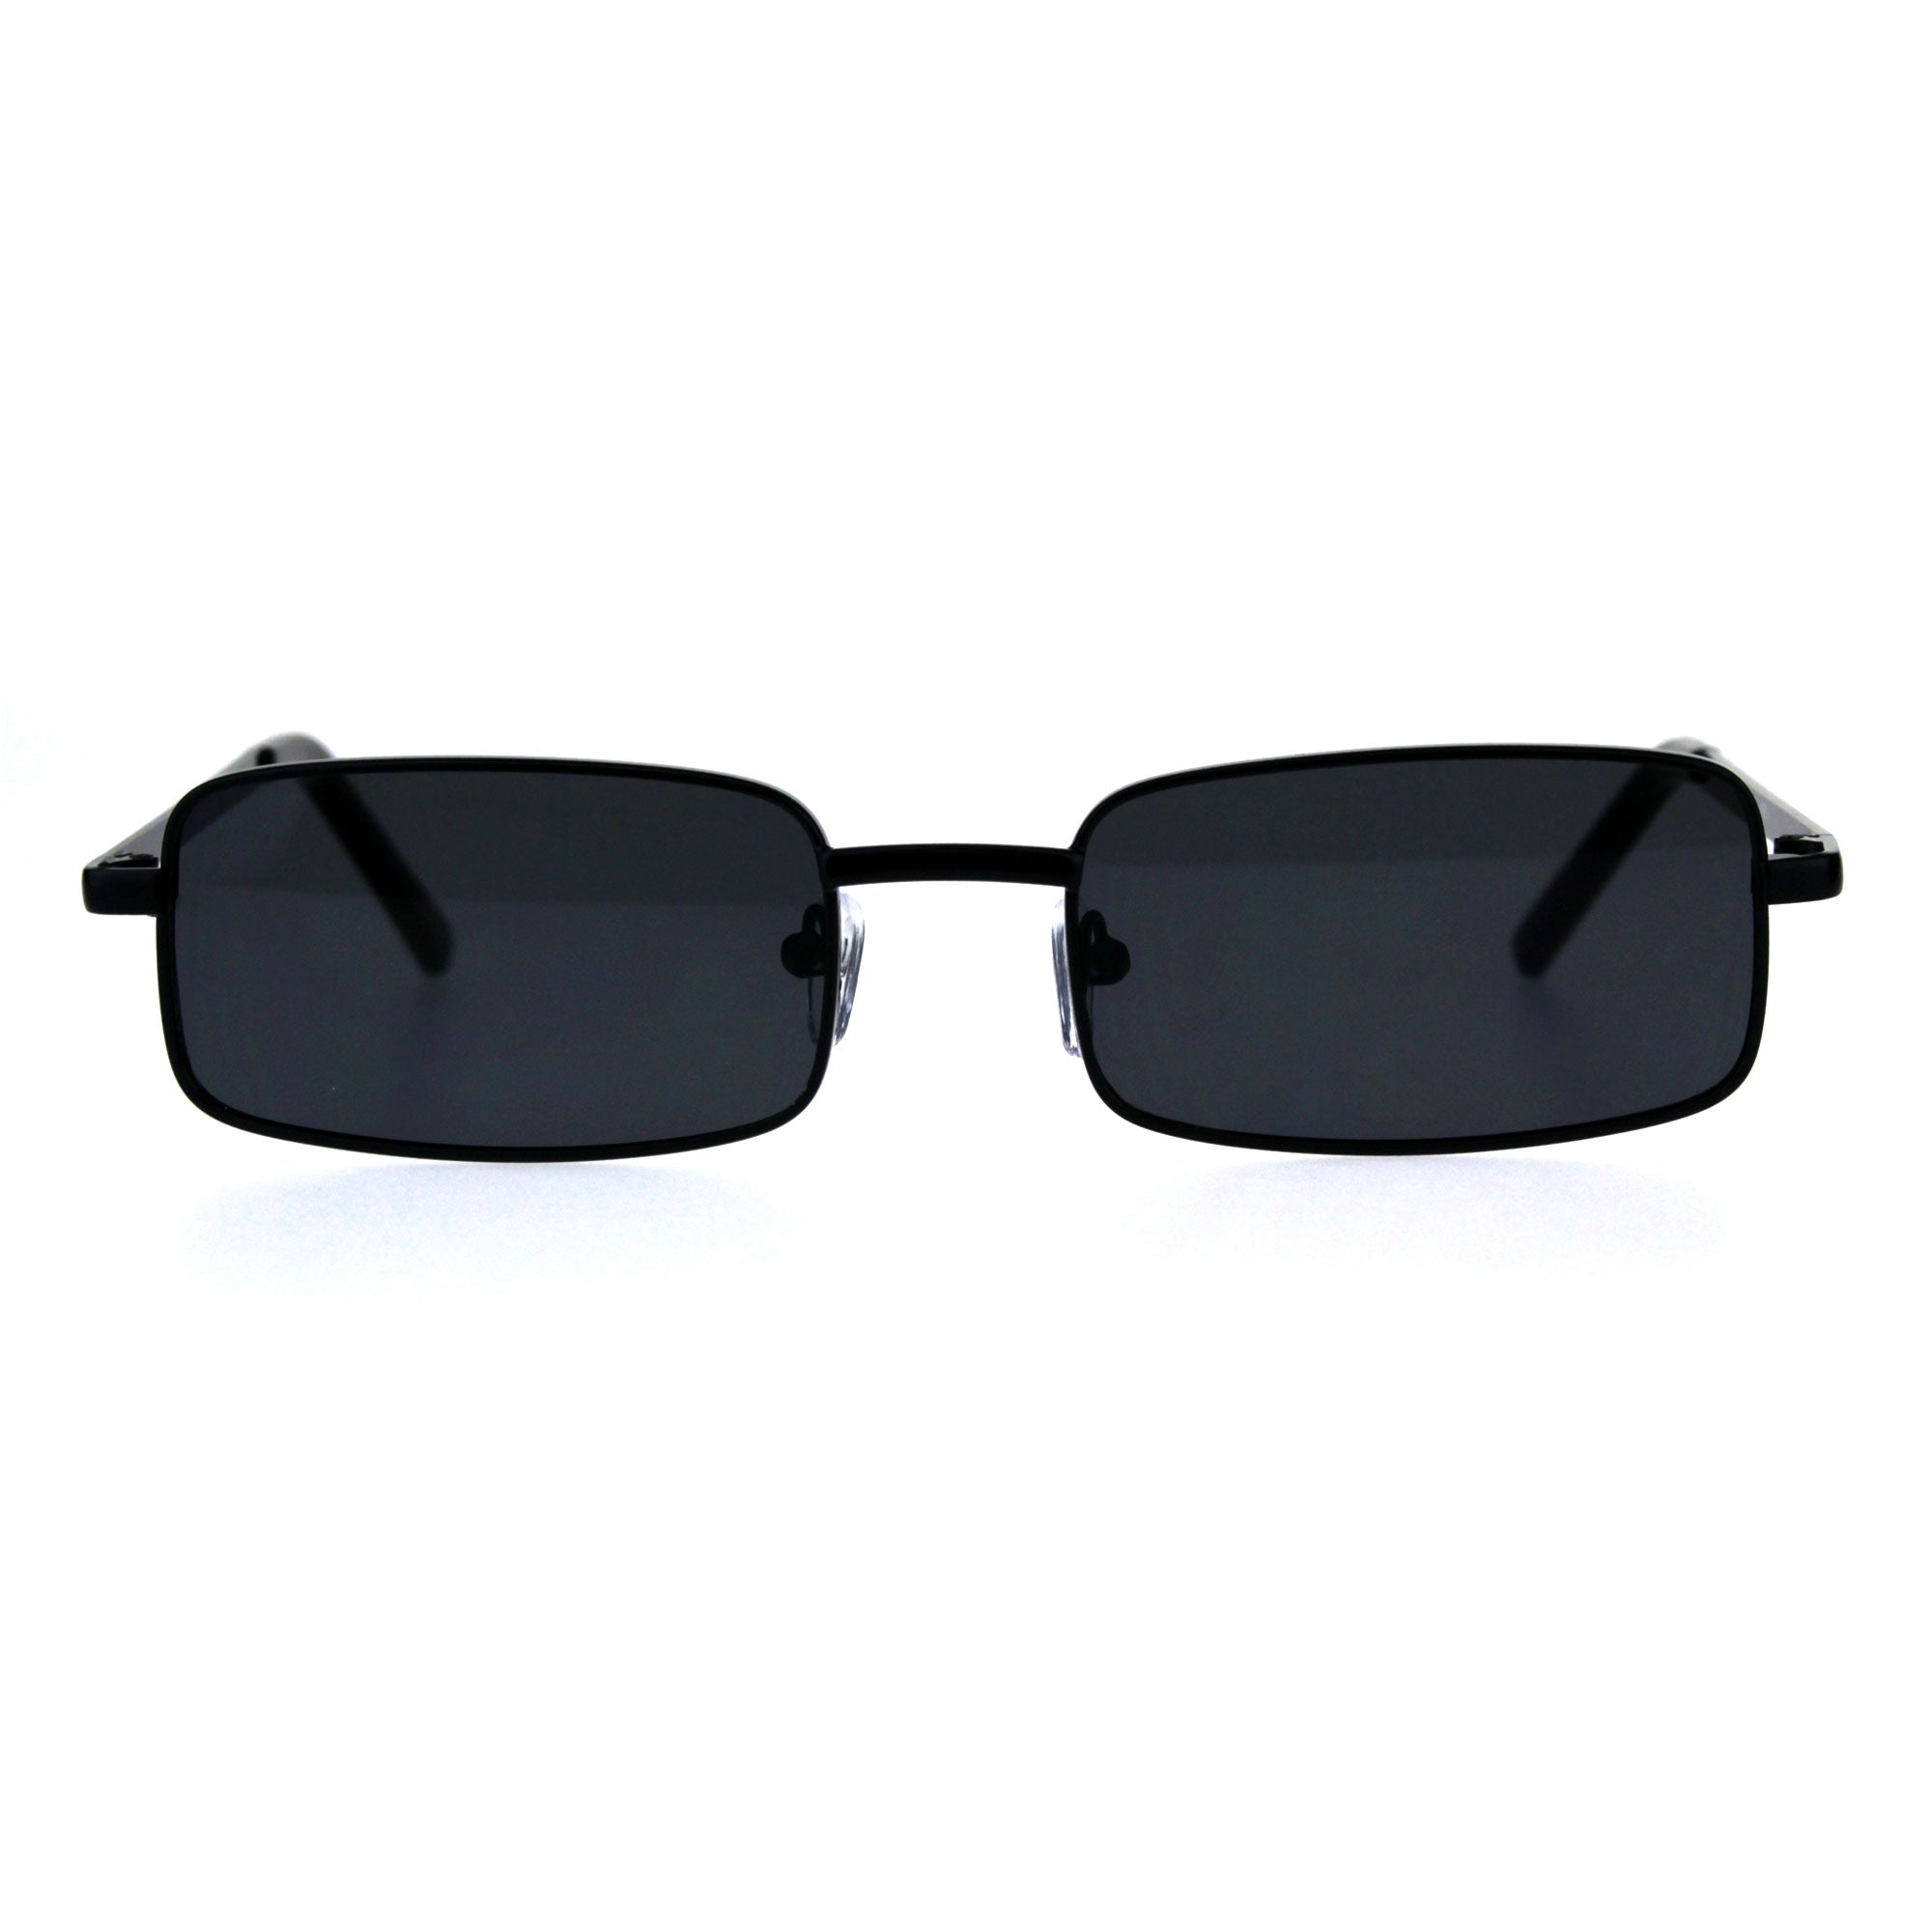 H1020 - Retro Metal Vintage Rectangle Fashion Sunglasses